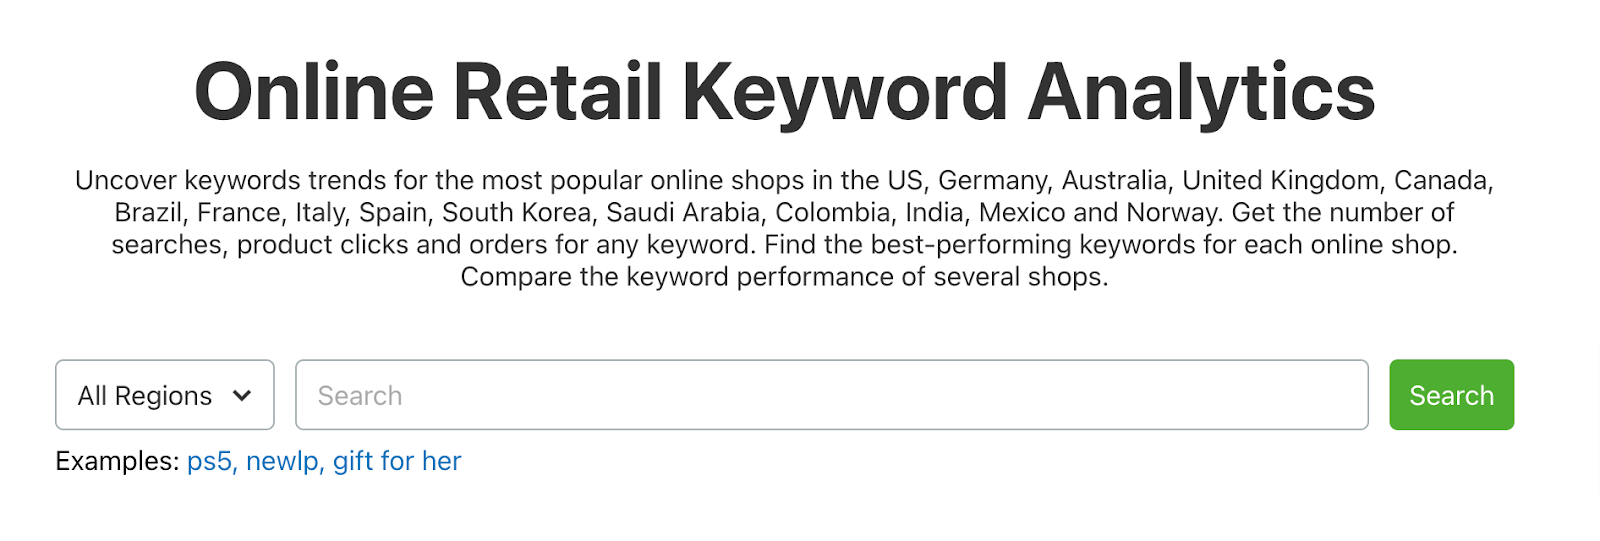 Online Retail Keyword Analytics app